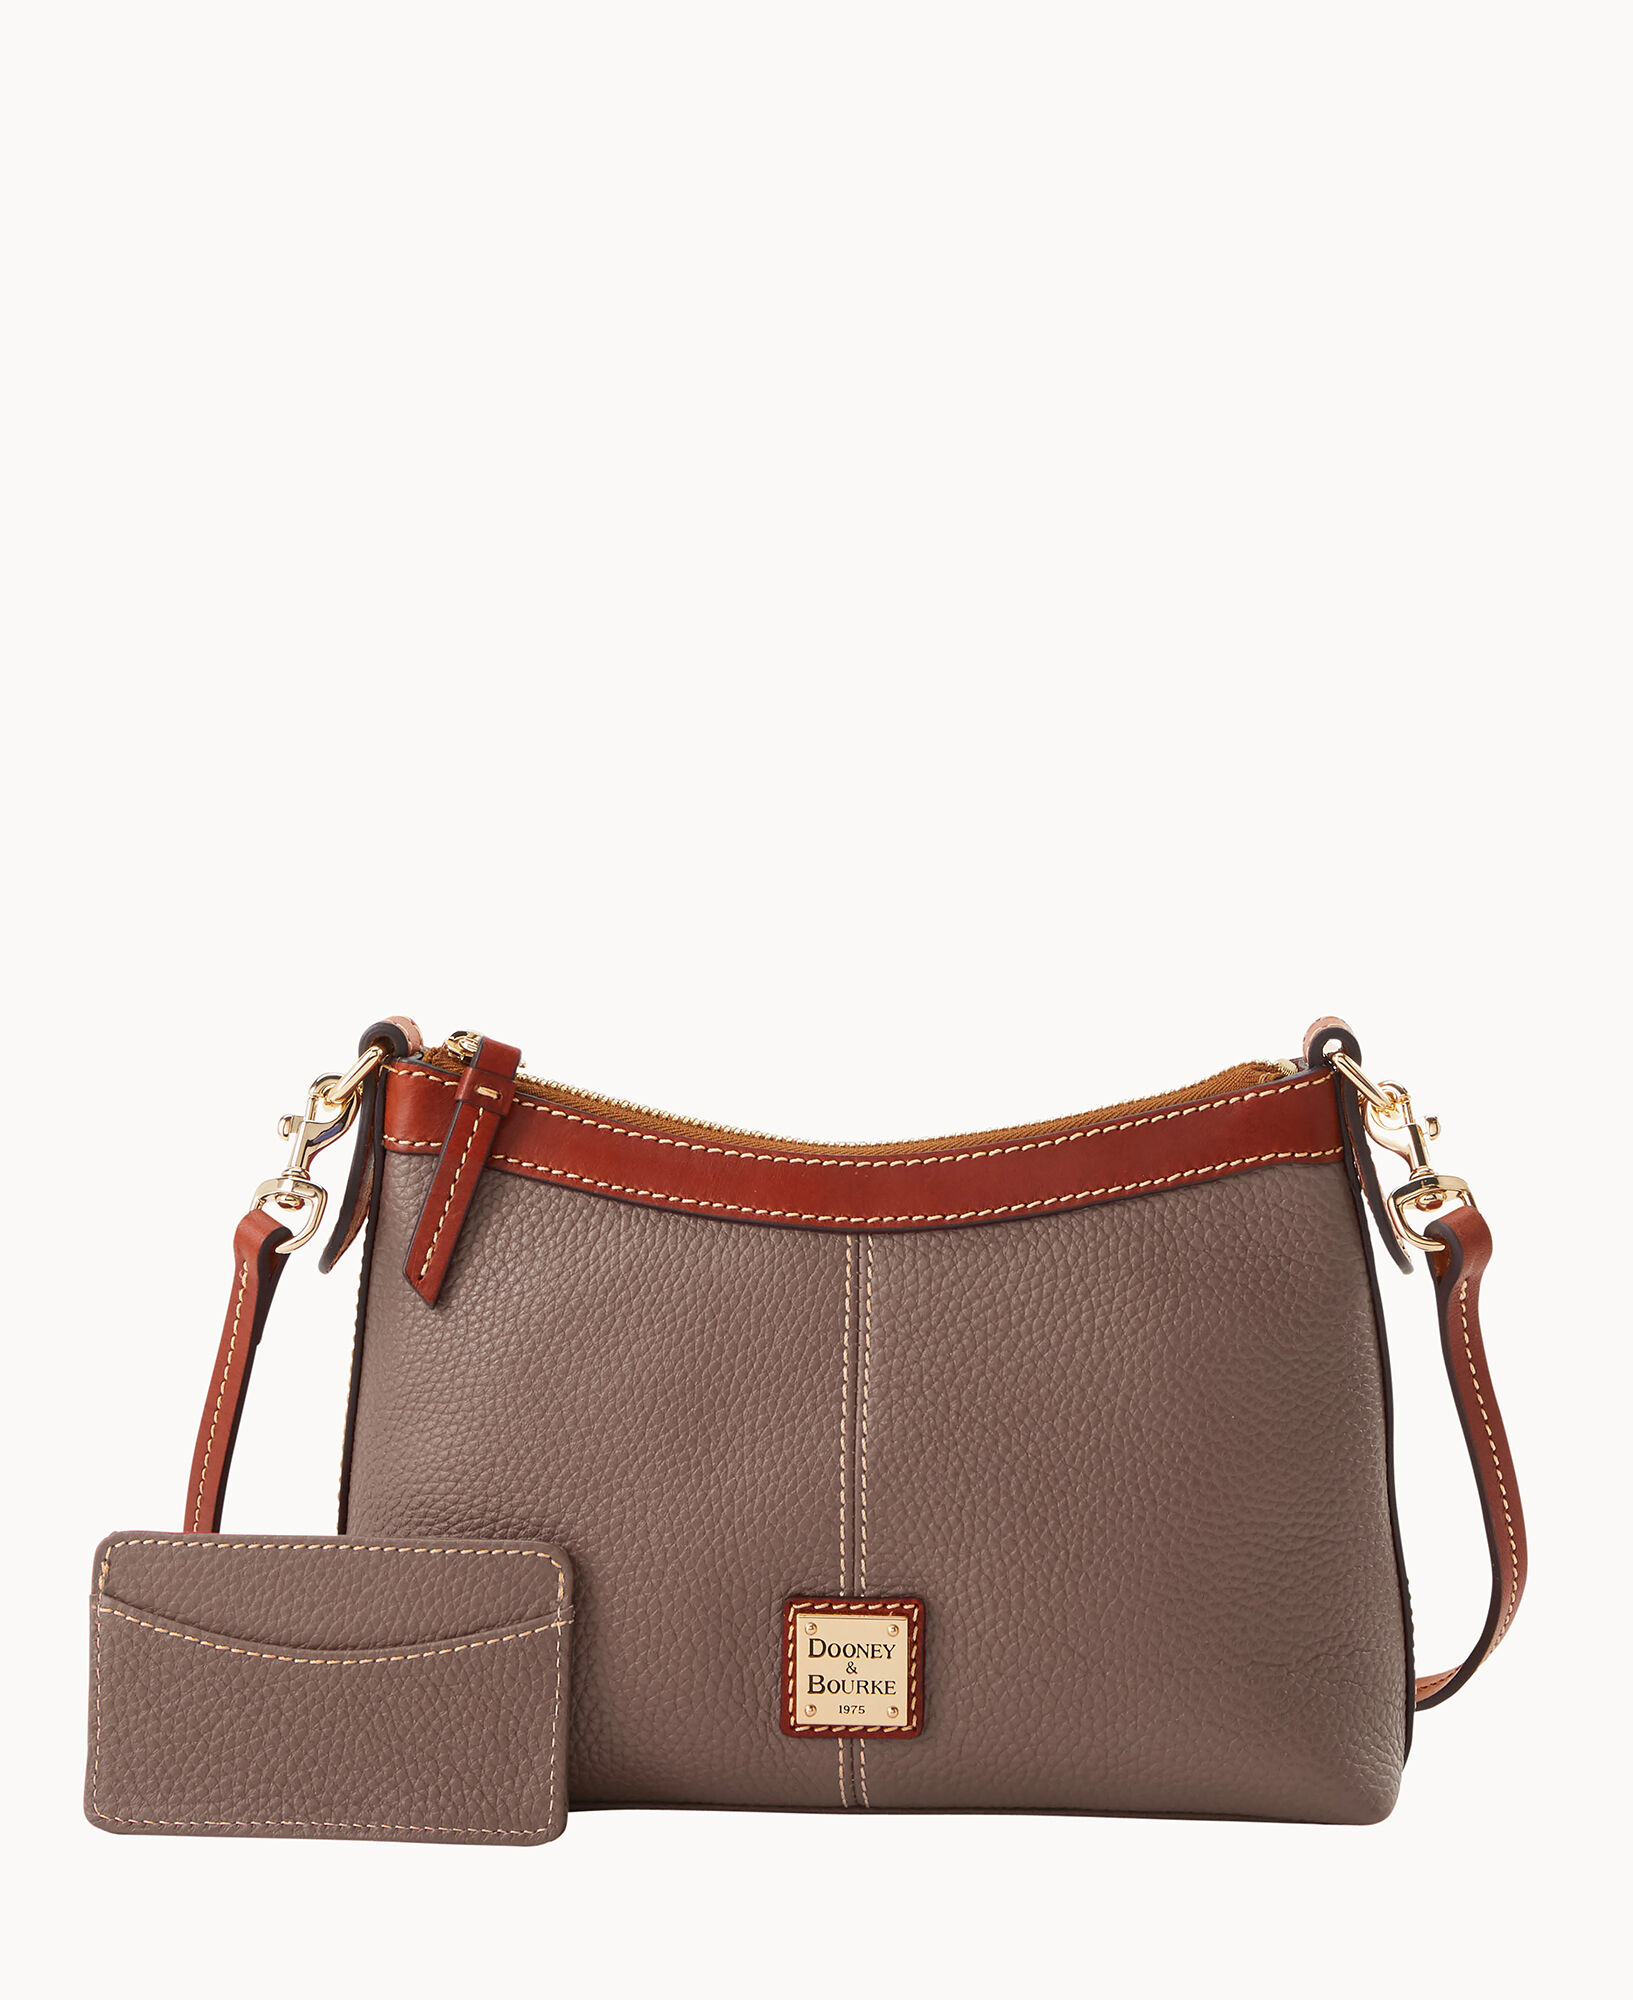 Dooney & Bourke Handbag, Pebble Grain Saddle Bag Crossbody - Black: Handbags